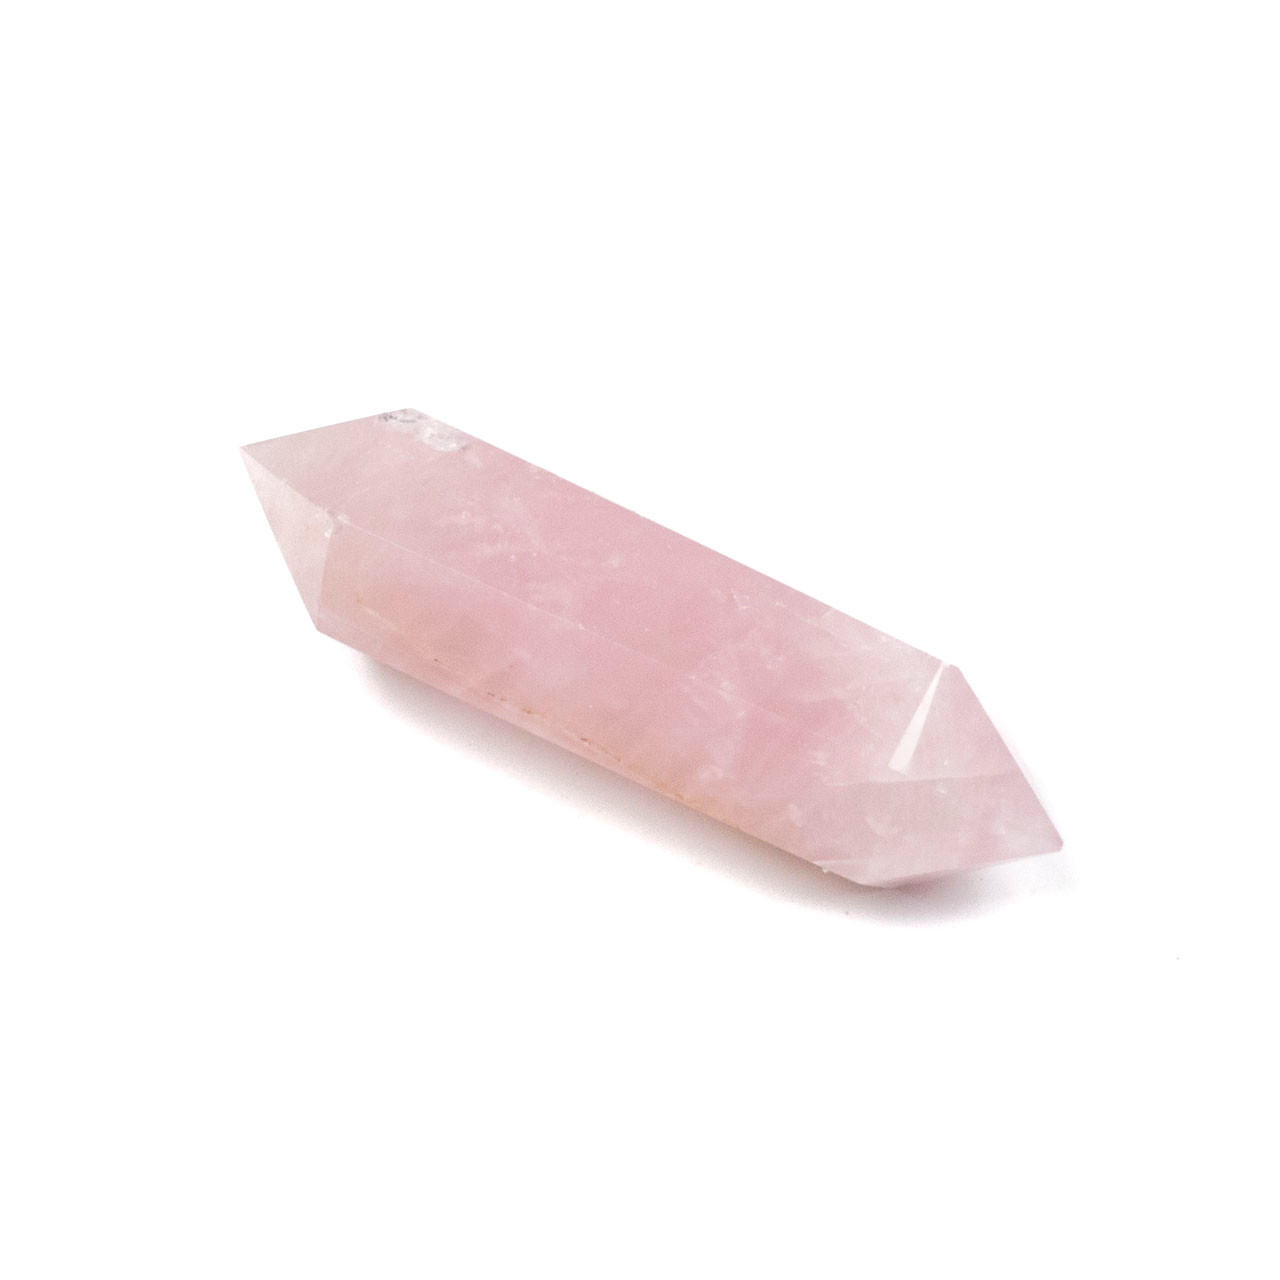 1PC Natural Rose Quartz Crystal Moon Pendant,Gemstone Necklace,Gemstones,Rock,Crystal Jewelry,Crystal healing,Mineral samples 2g+